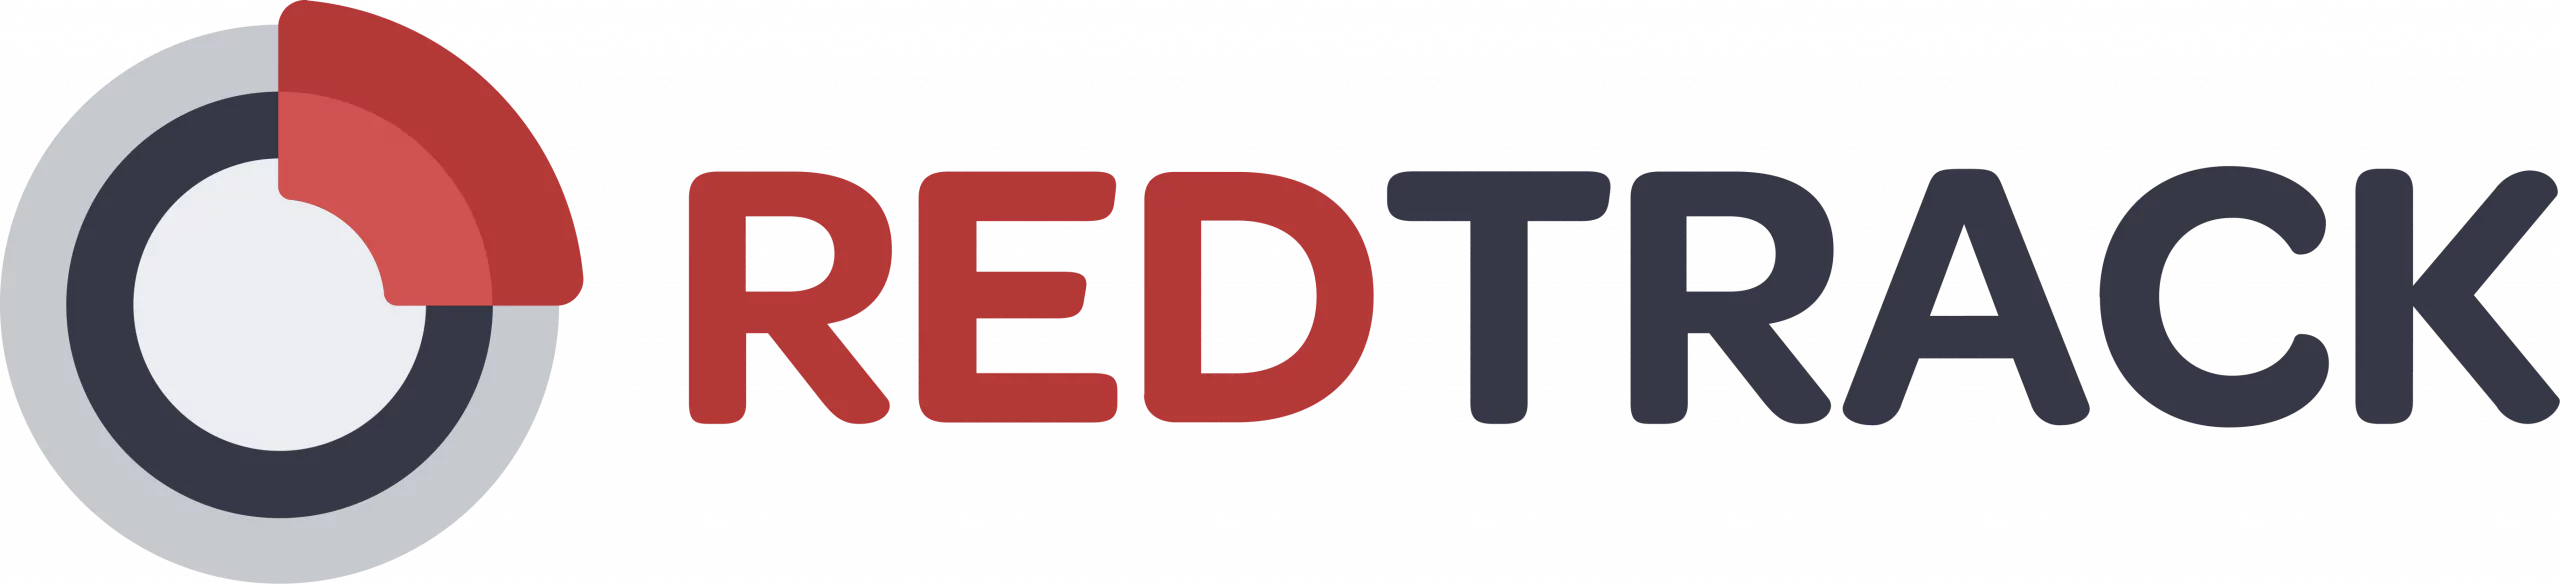 RedTrack logo